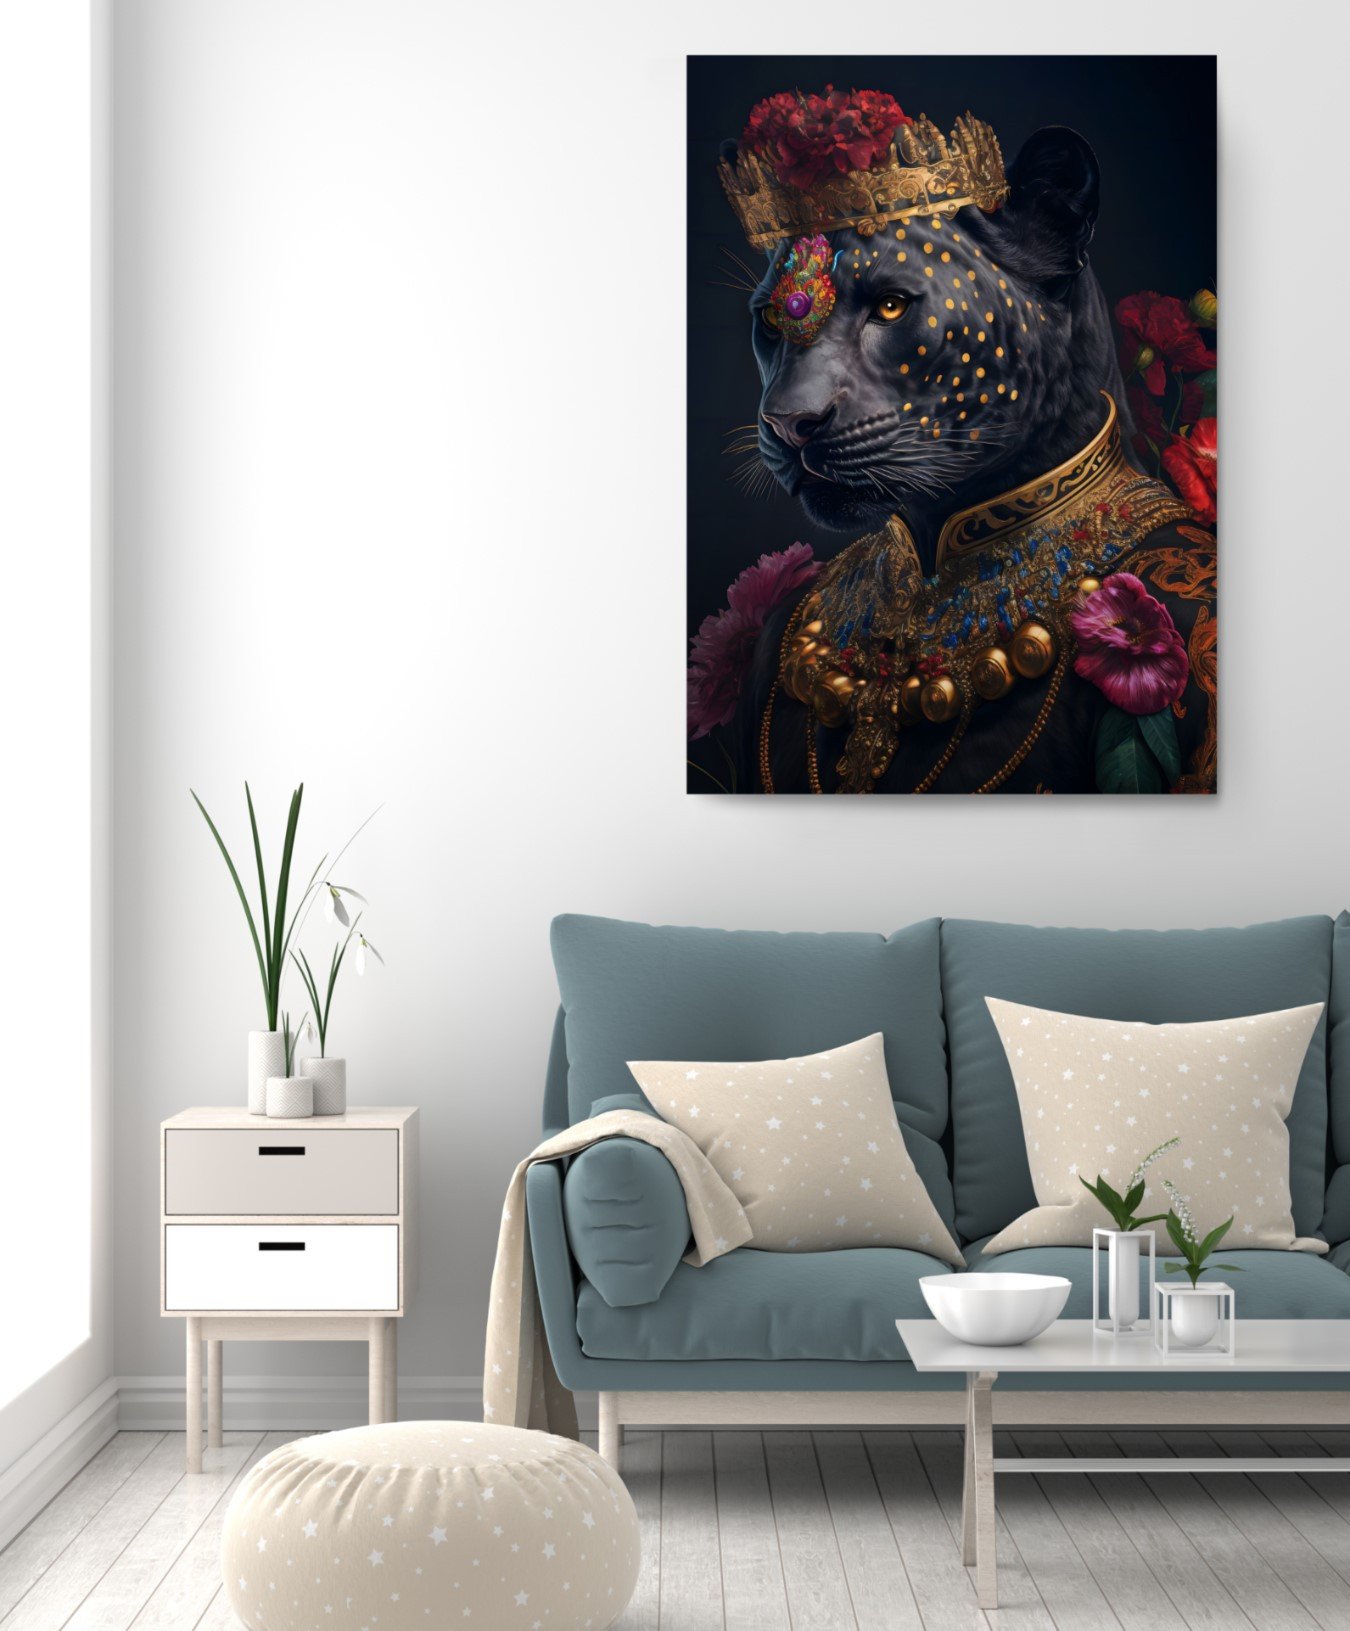 Majesty Black Panther Animal Kingdom Motivation Canvas Print Wall Art